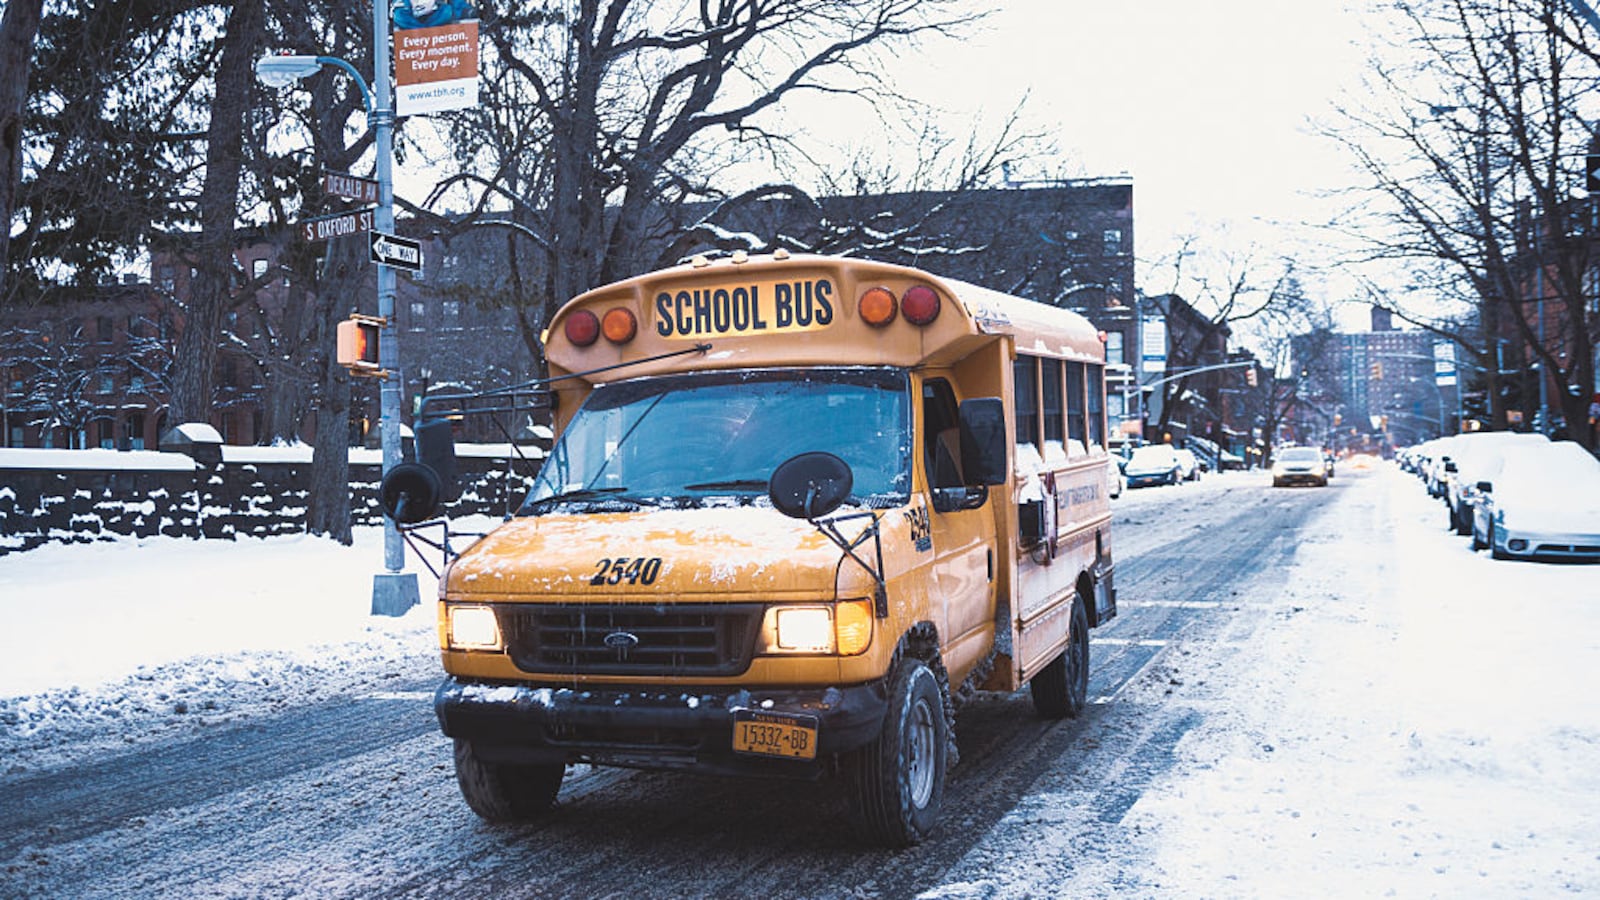 A school bus on Dekalb avenue in Fort Greene Brooklyn during a snow storm.